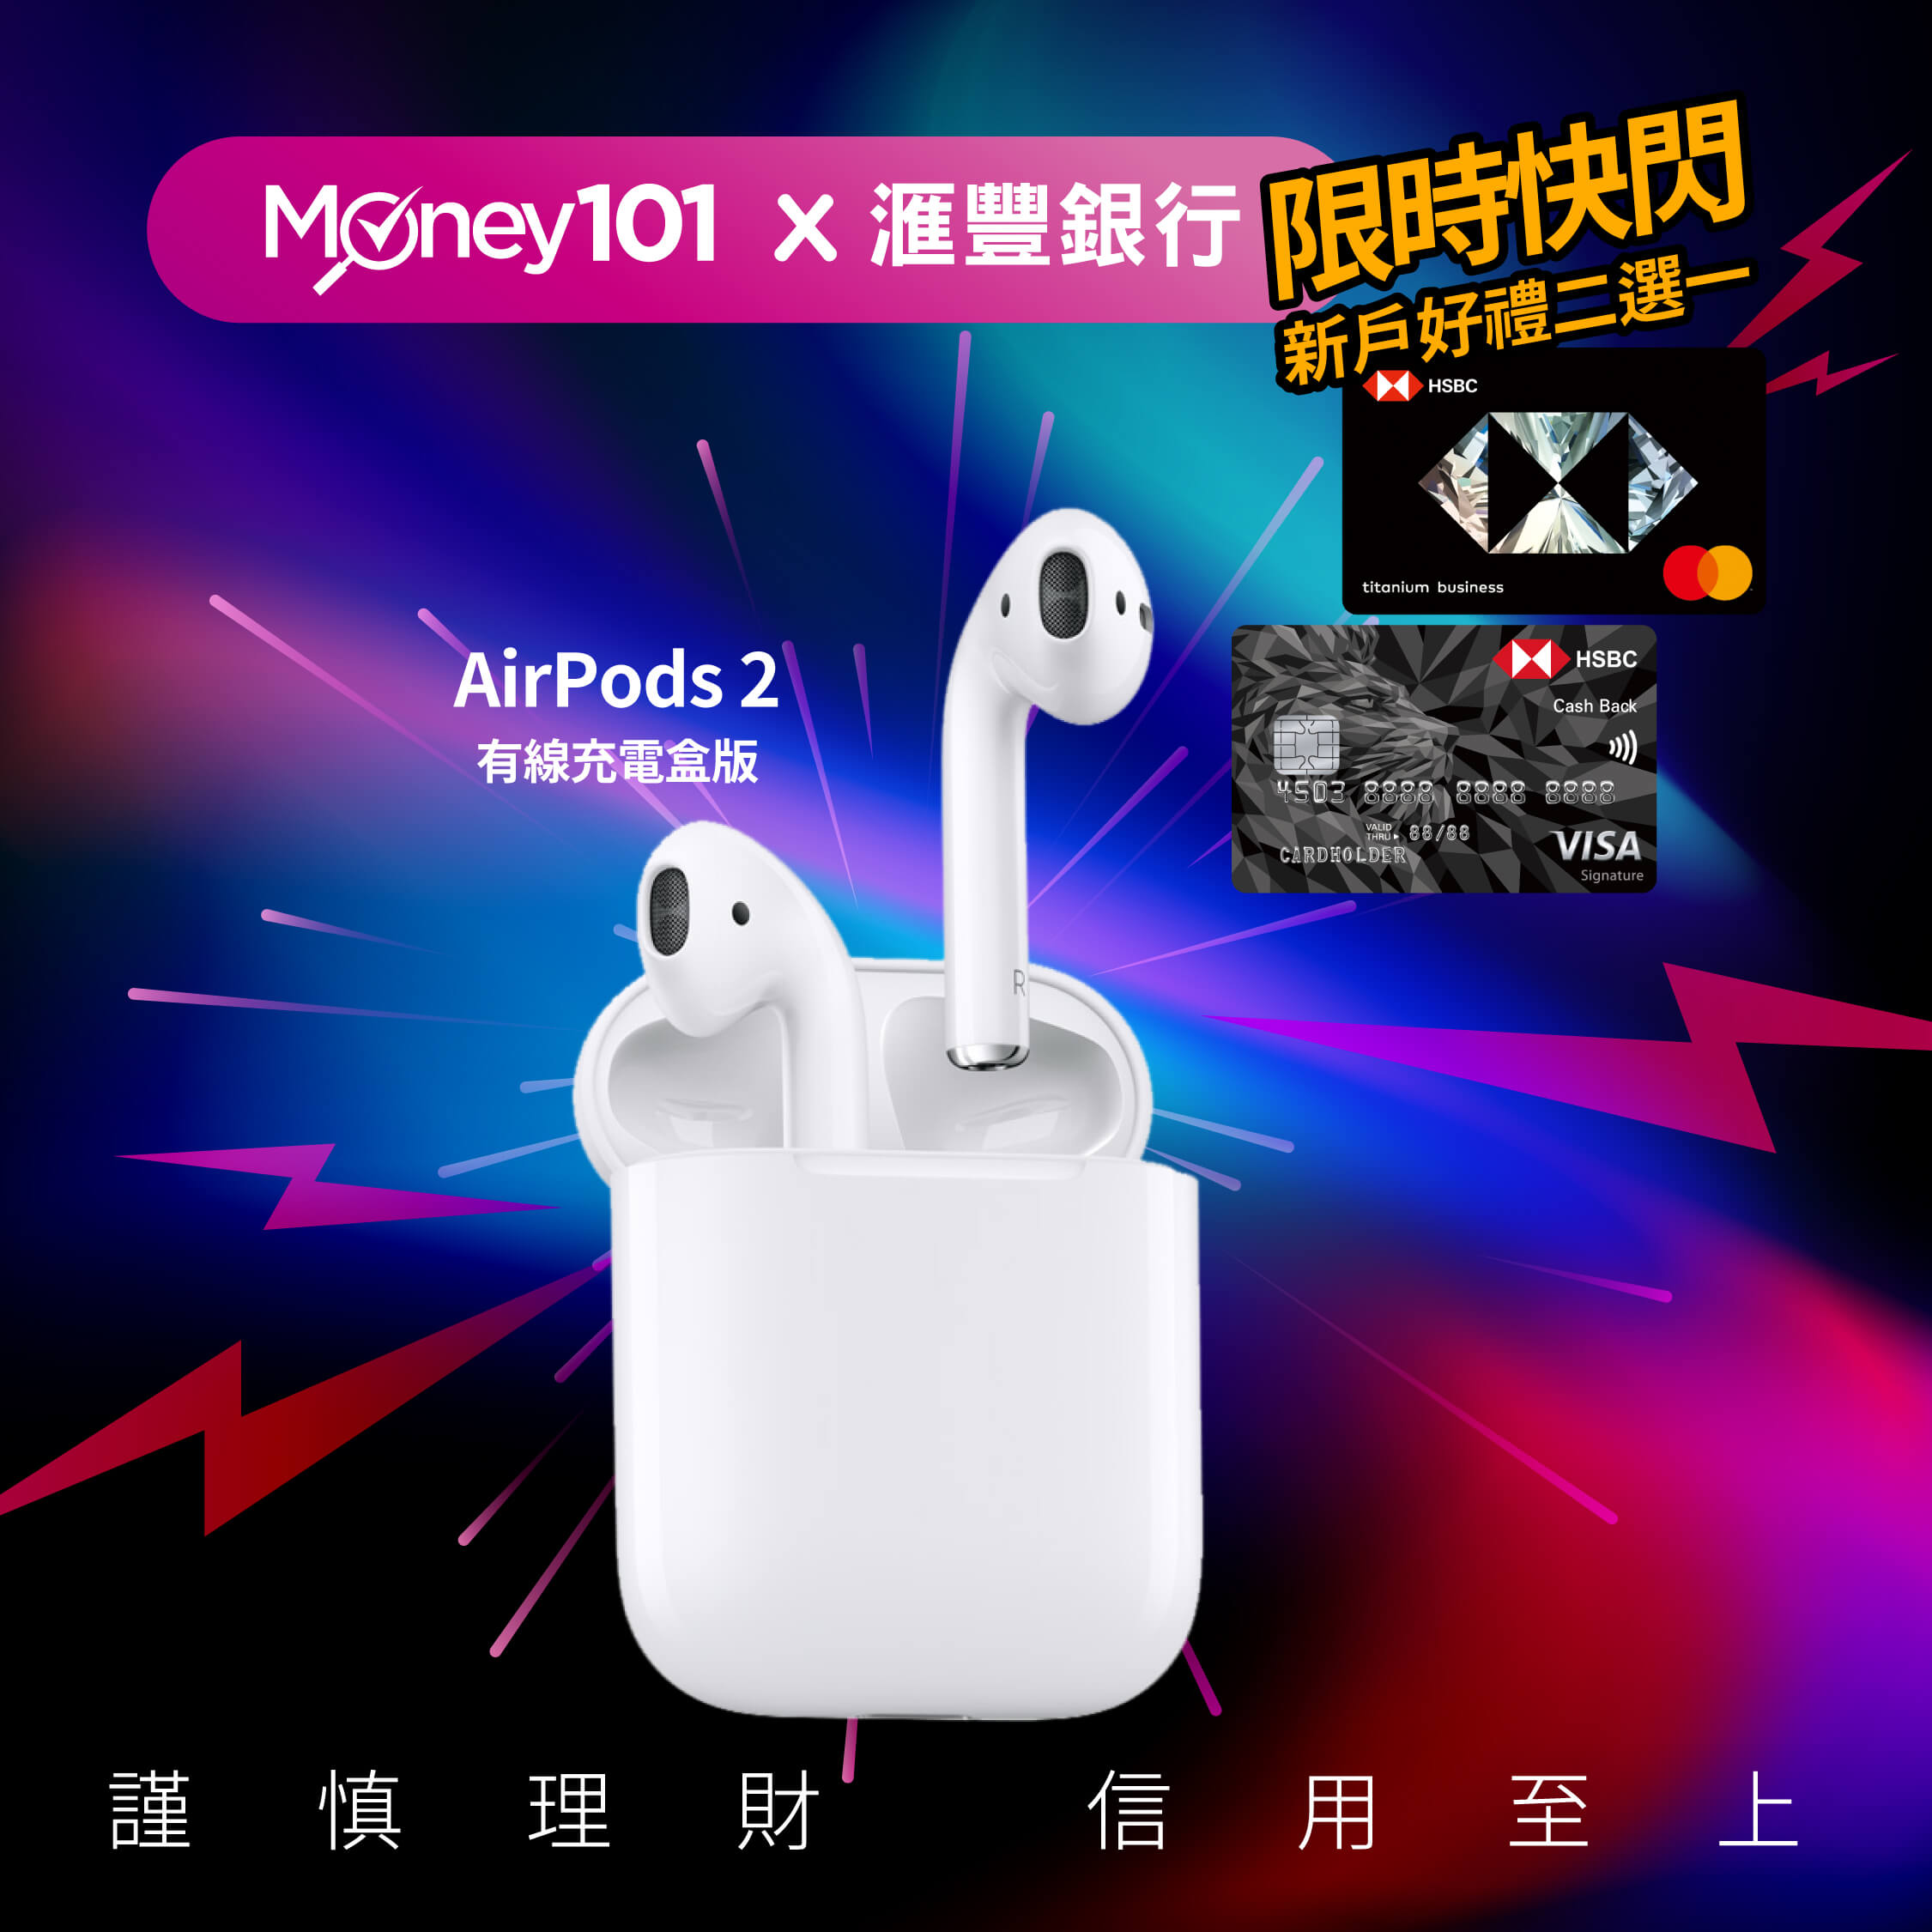 Money101-滙豐-final_fb_1080x1080-AirPods 2